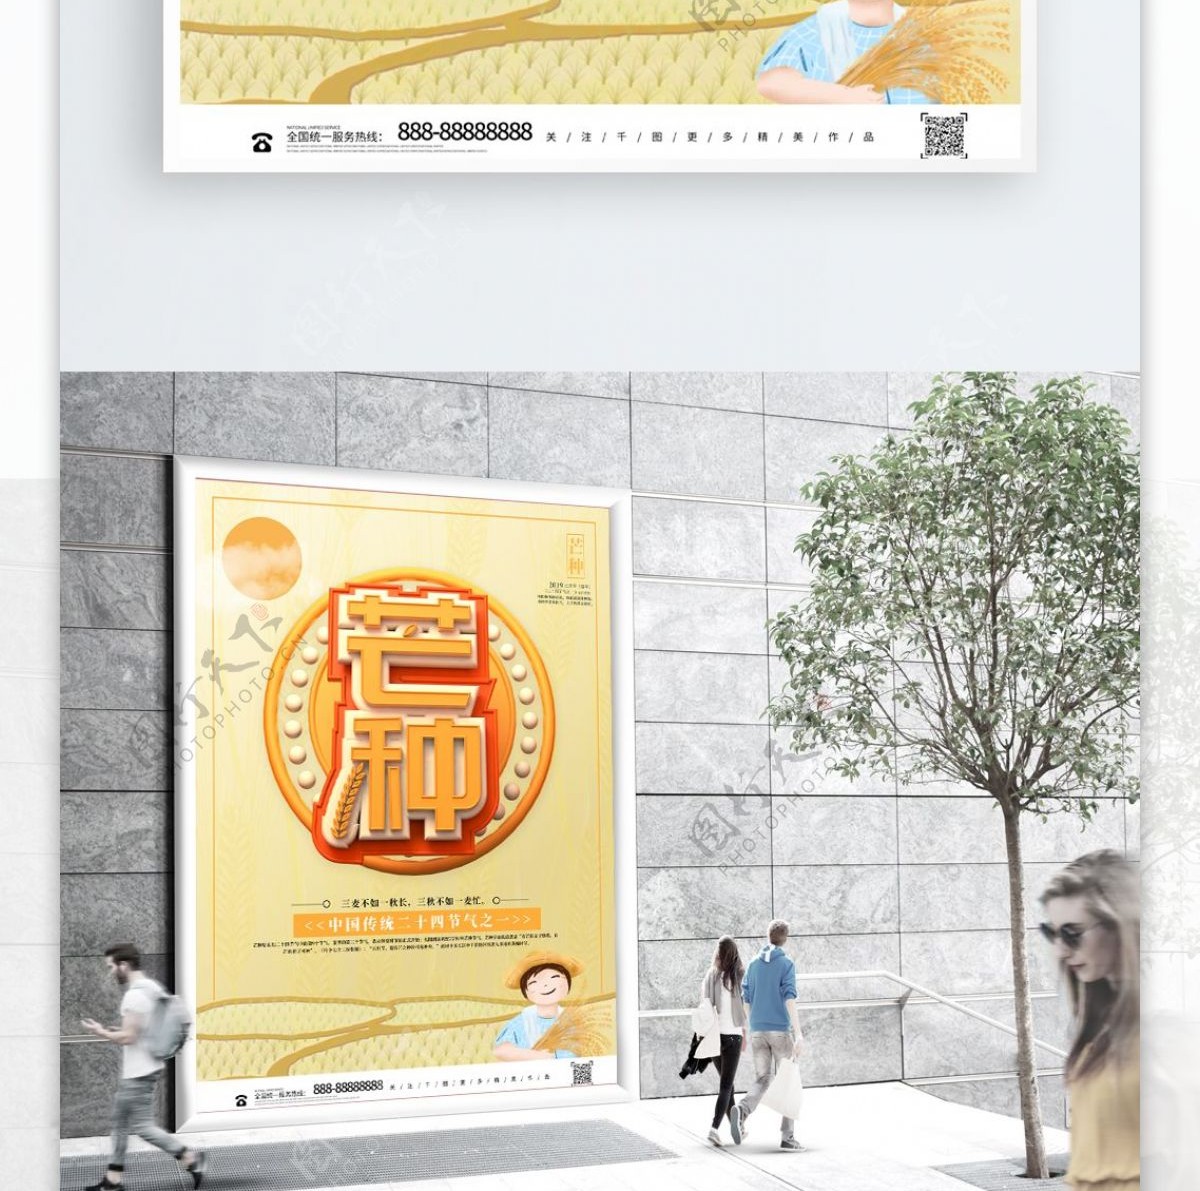 C4D创意大气中国二十四节气芒种海报